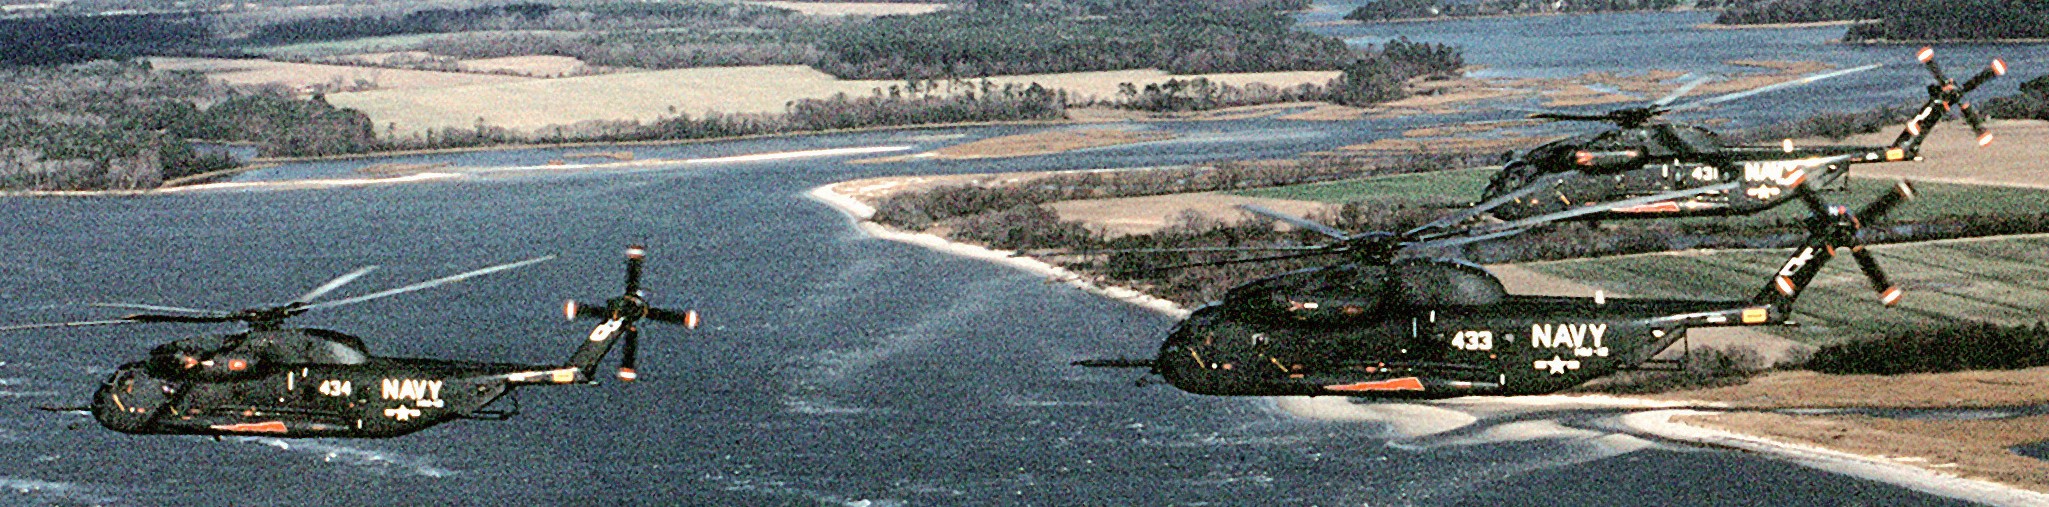 hm-12 sea dragons helicopter mine countermeasures squadron navy rh-53d sea stallion 29